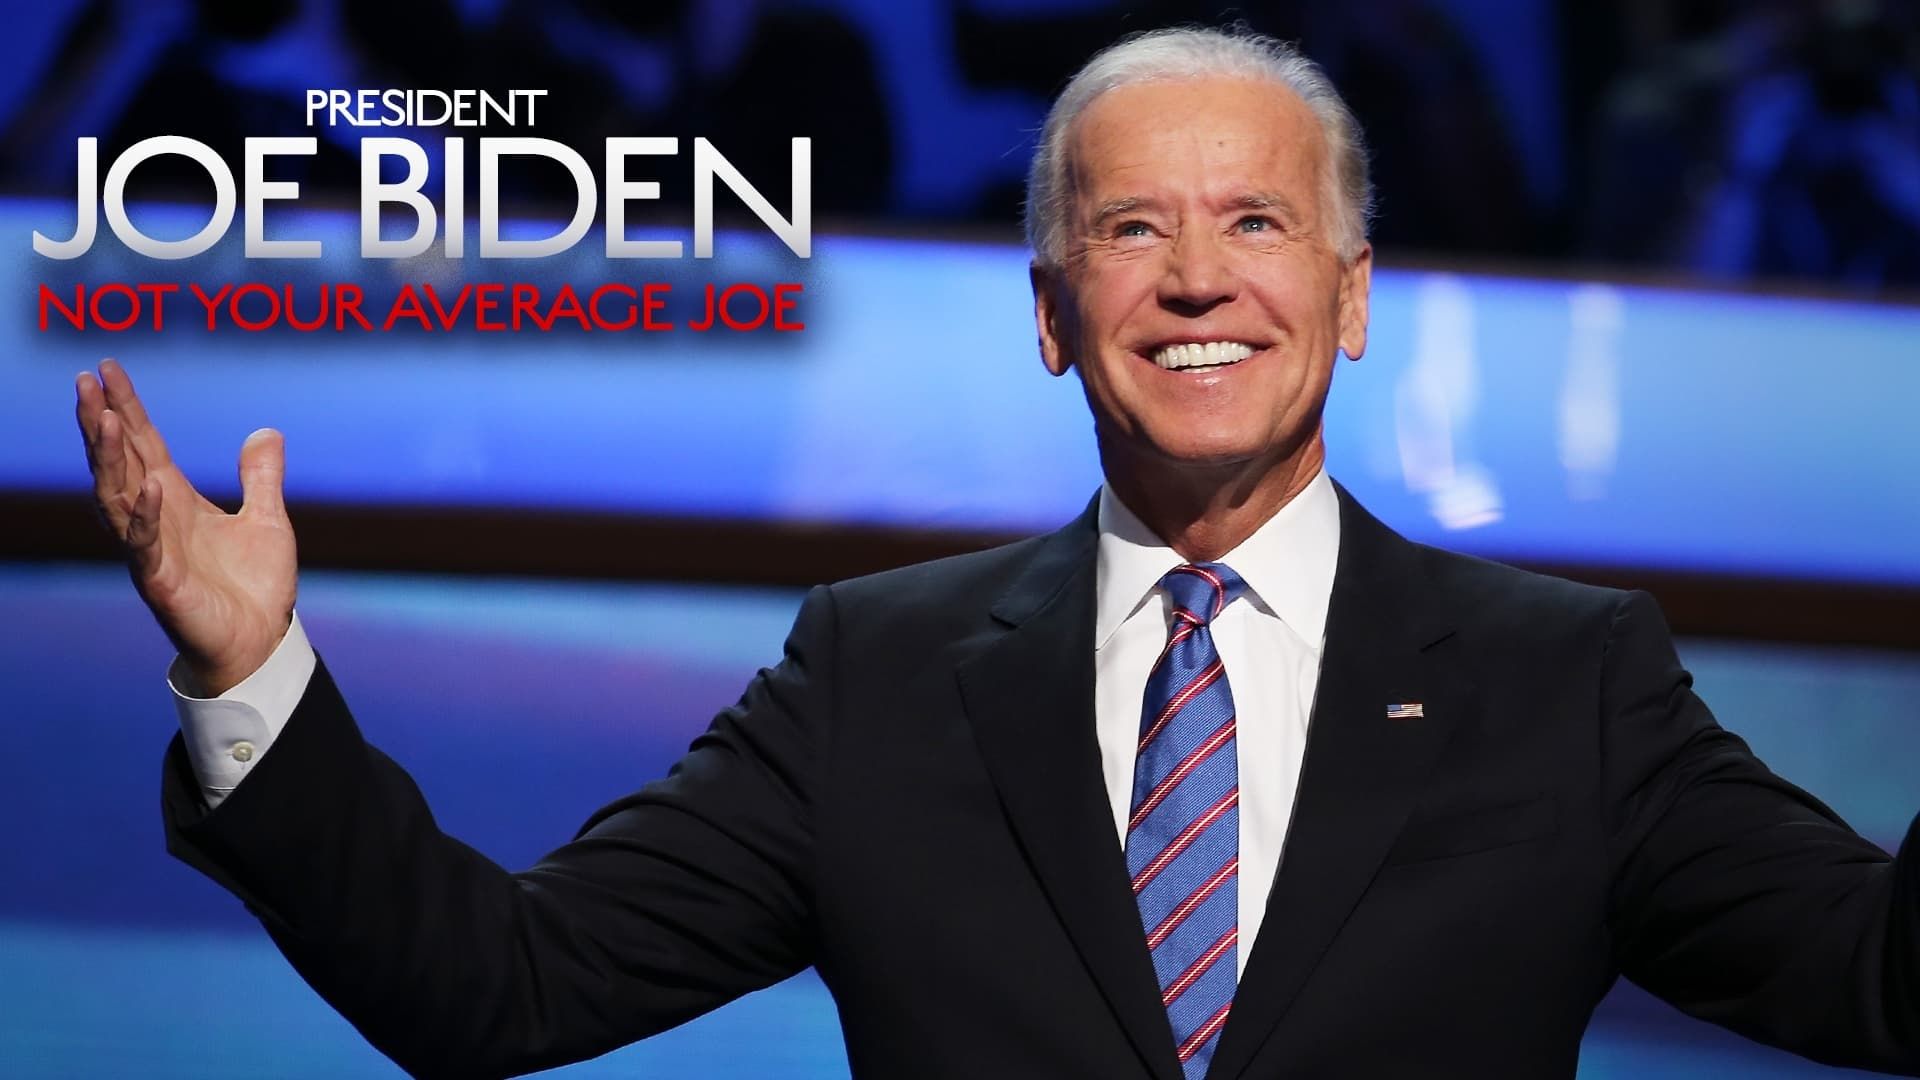 President Joe Biden: Not Your Average Joe background